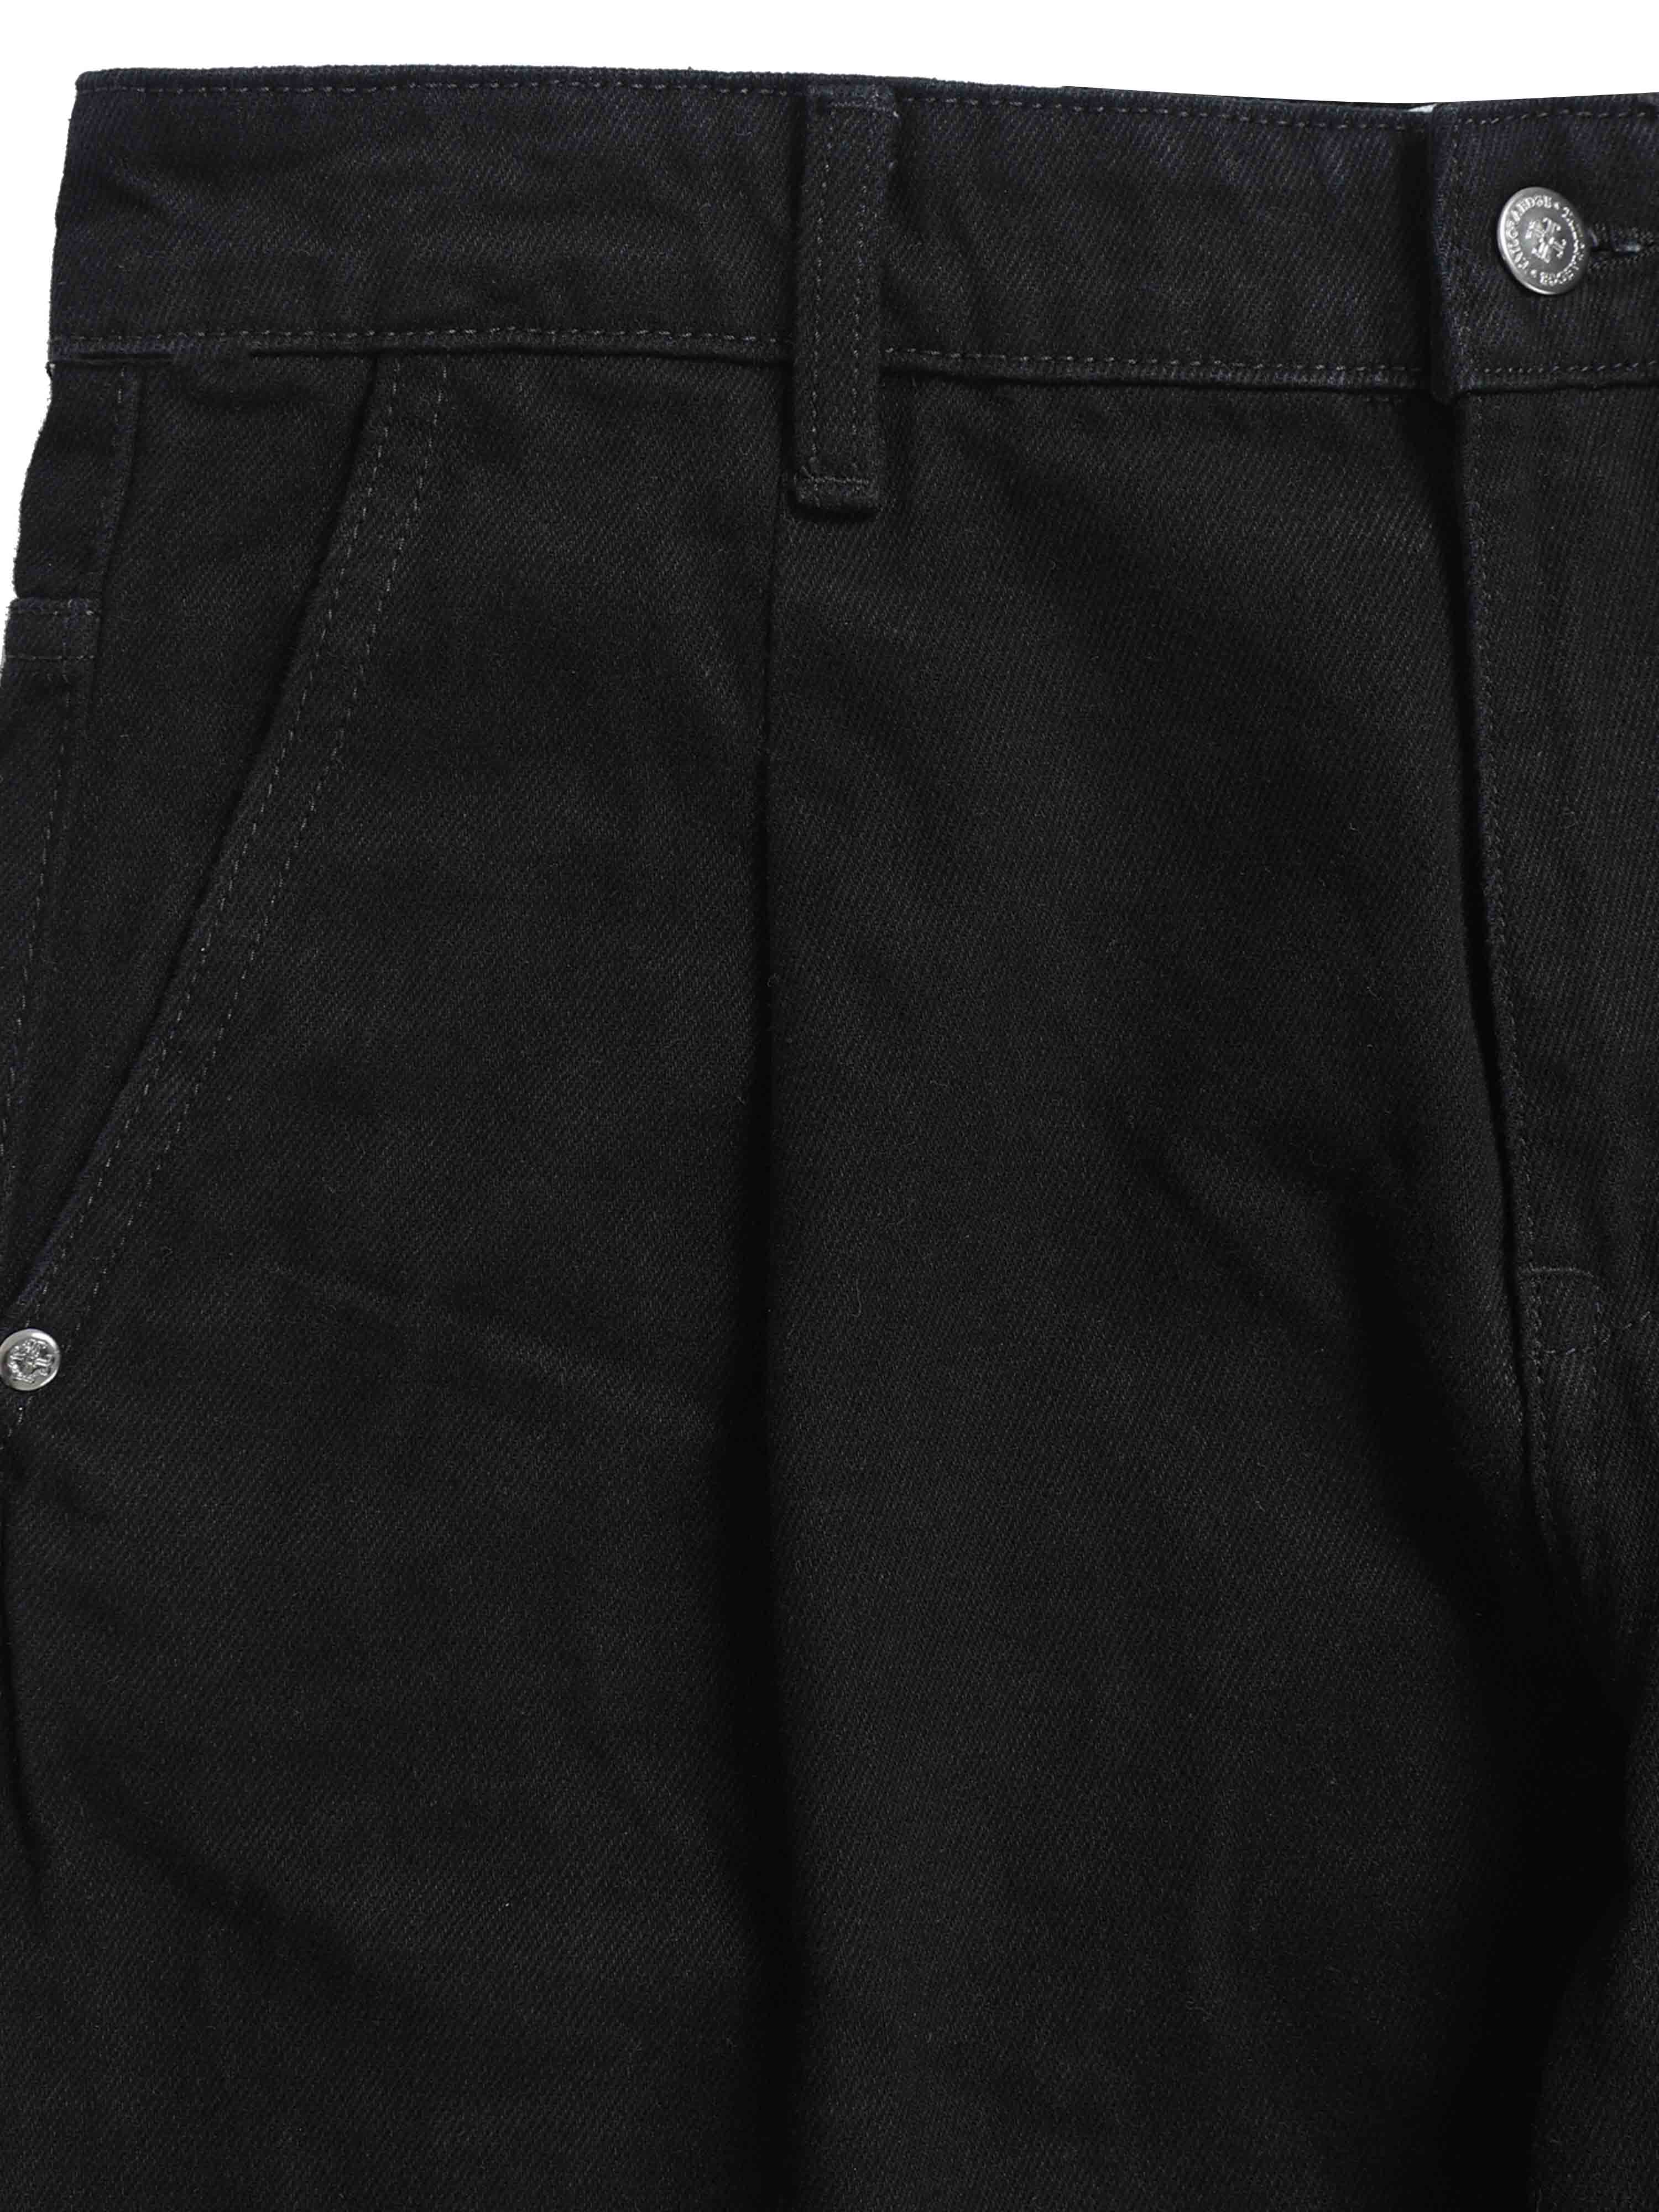 Buy Black Trousers & Pants for Men by Gabardine Online | Ajio.com